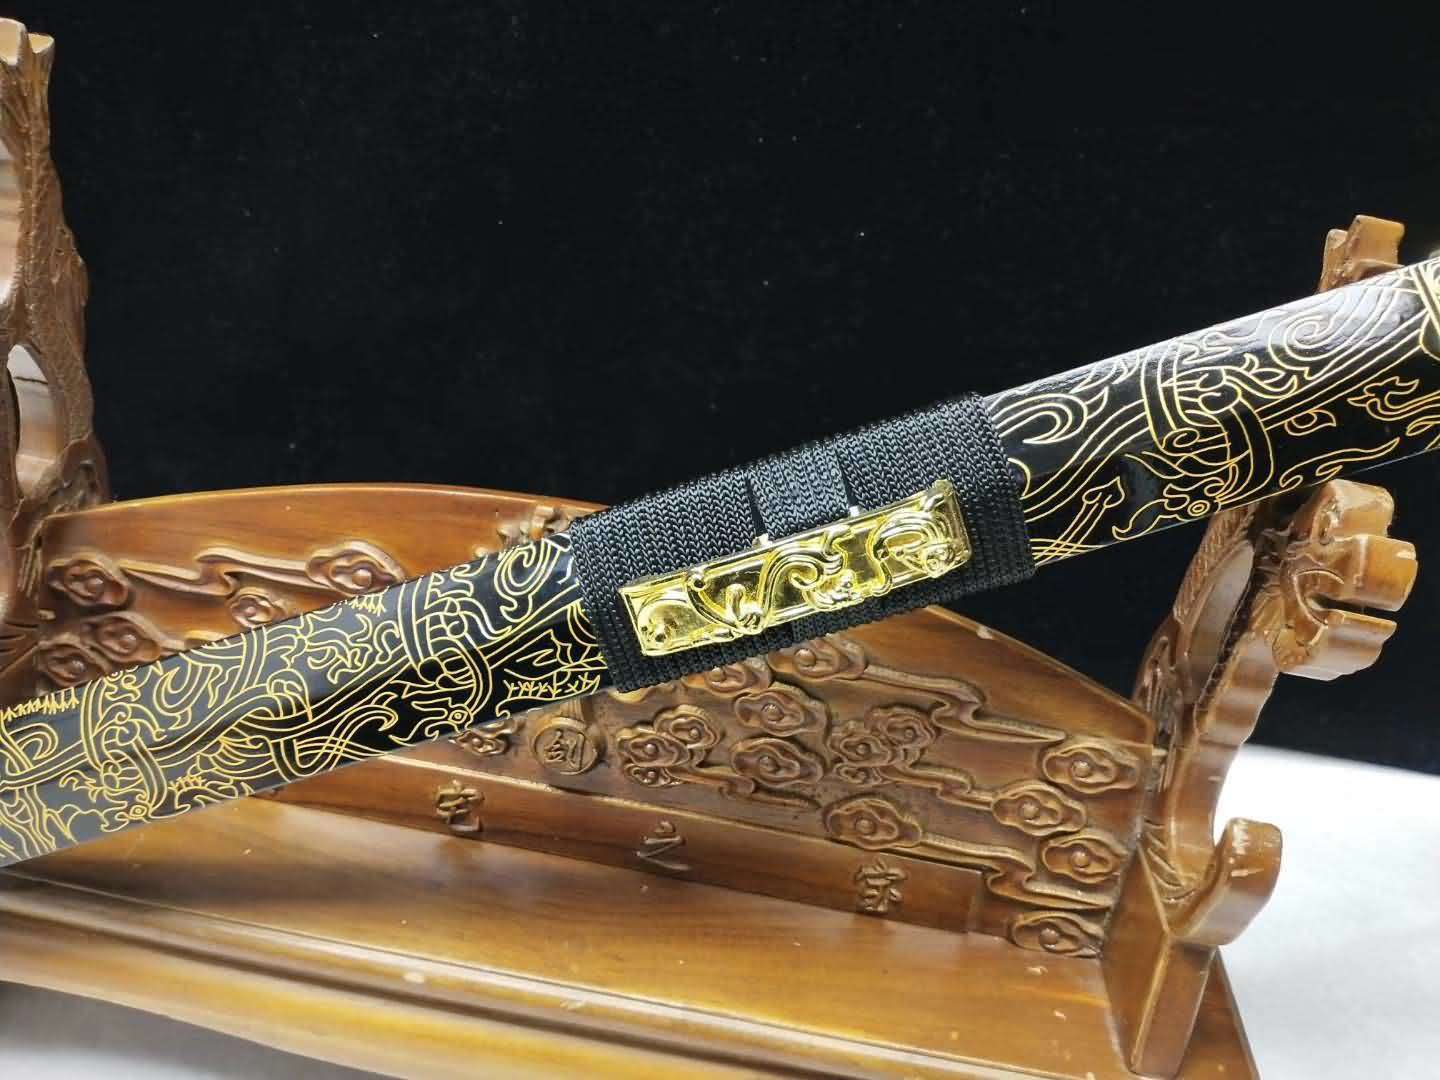 Dragon han jian,Medium carbon steel etch blade,Alloy fittings - Chinese sword shop